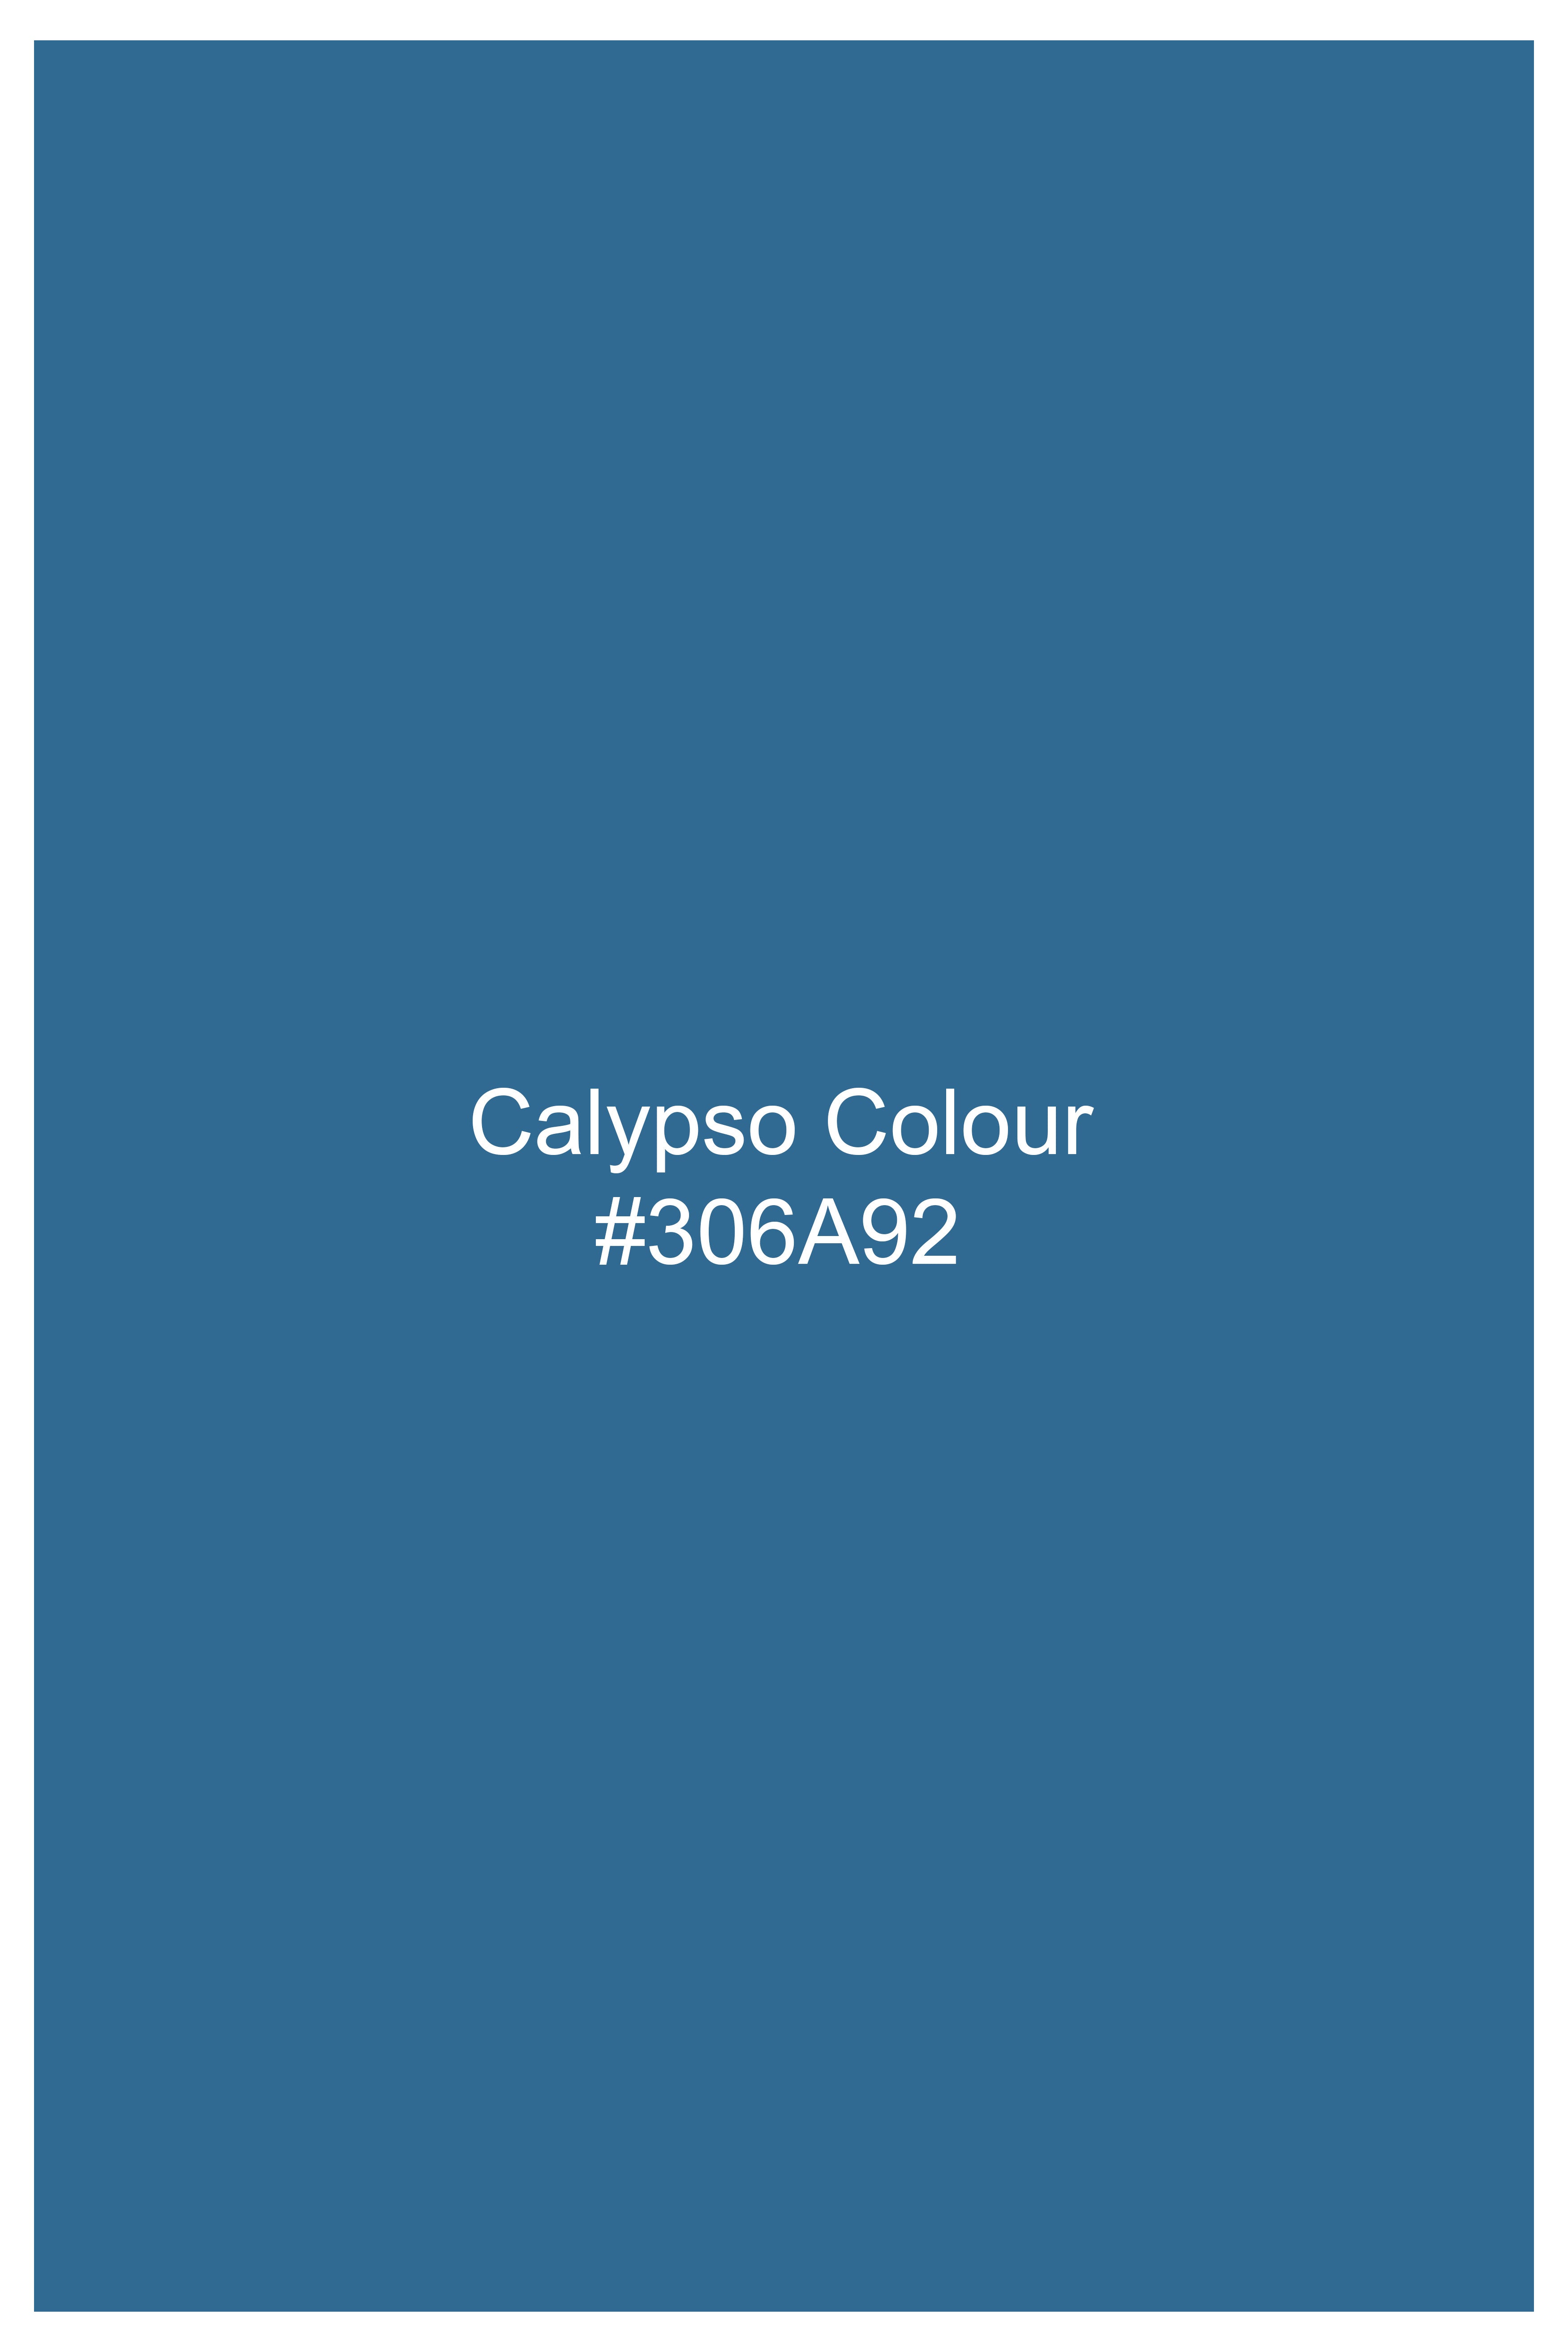 Calypso Blue Wool Rich Waistcoat V3064-36, V3064-38, V3064-40, V3064-42, V3064-44, V3064-46, V3064-48, V3064-50, V3064-64, V3064-54, V3064-56, V3064-58, V3064-60